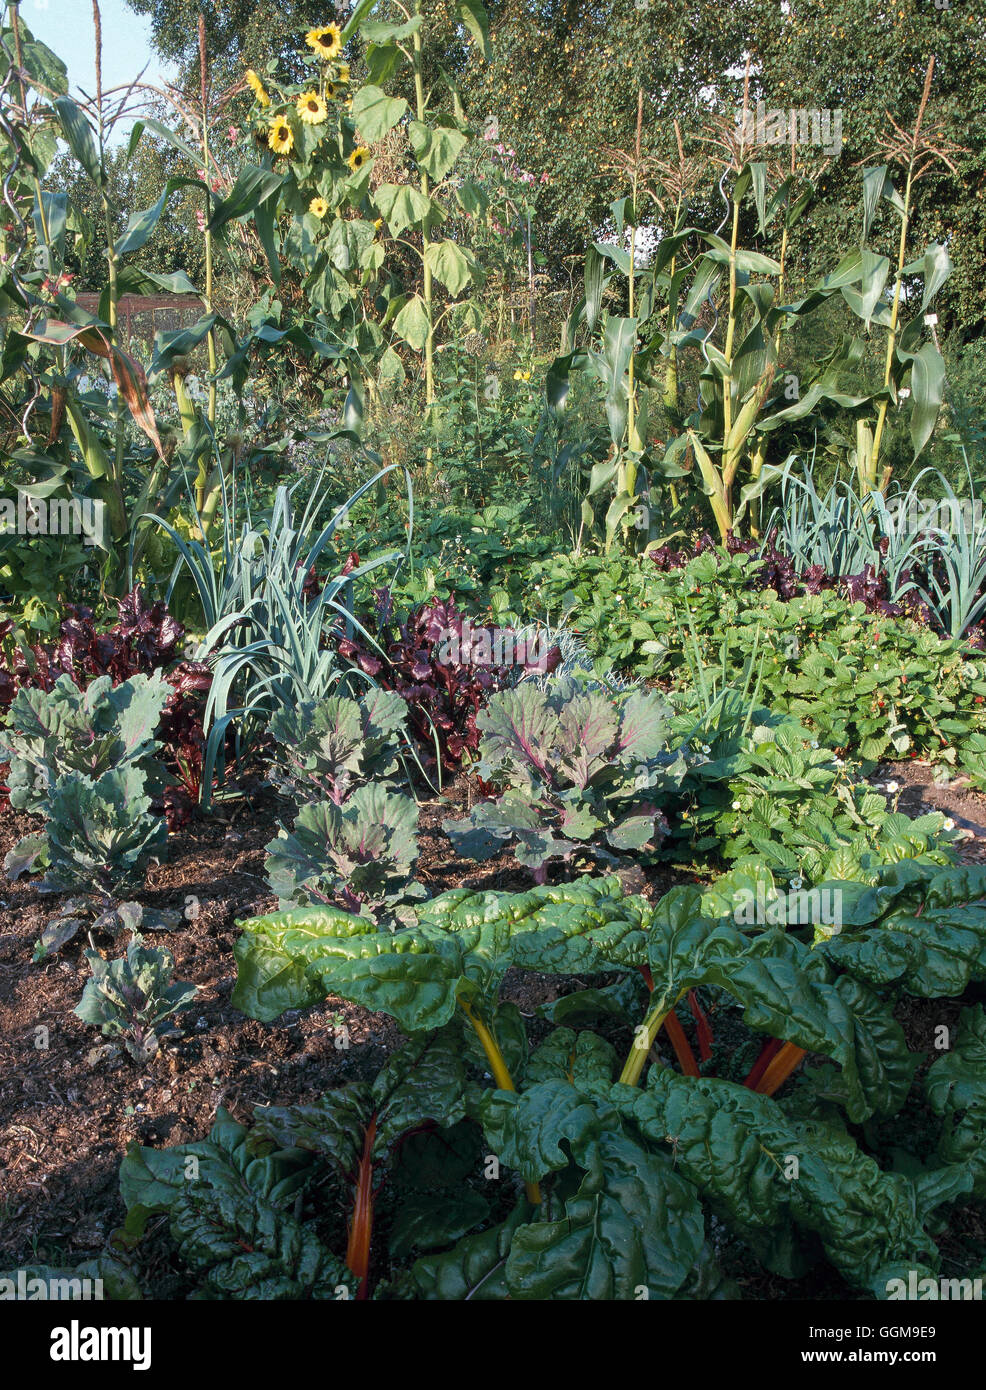 Vegetable Garden - in August - Organic - (Please credit: Photos Hort/Joy Larkcom)   VGN090278     Ph Stock Photo